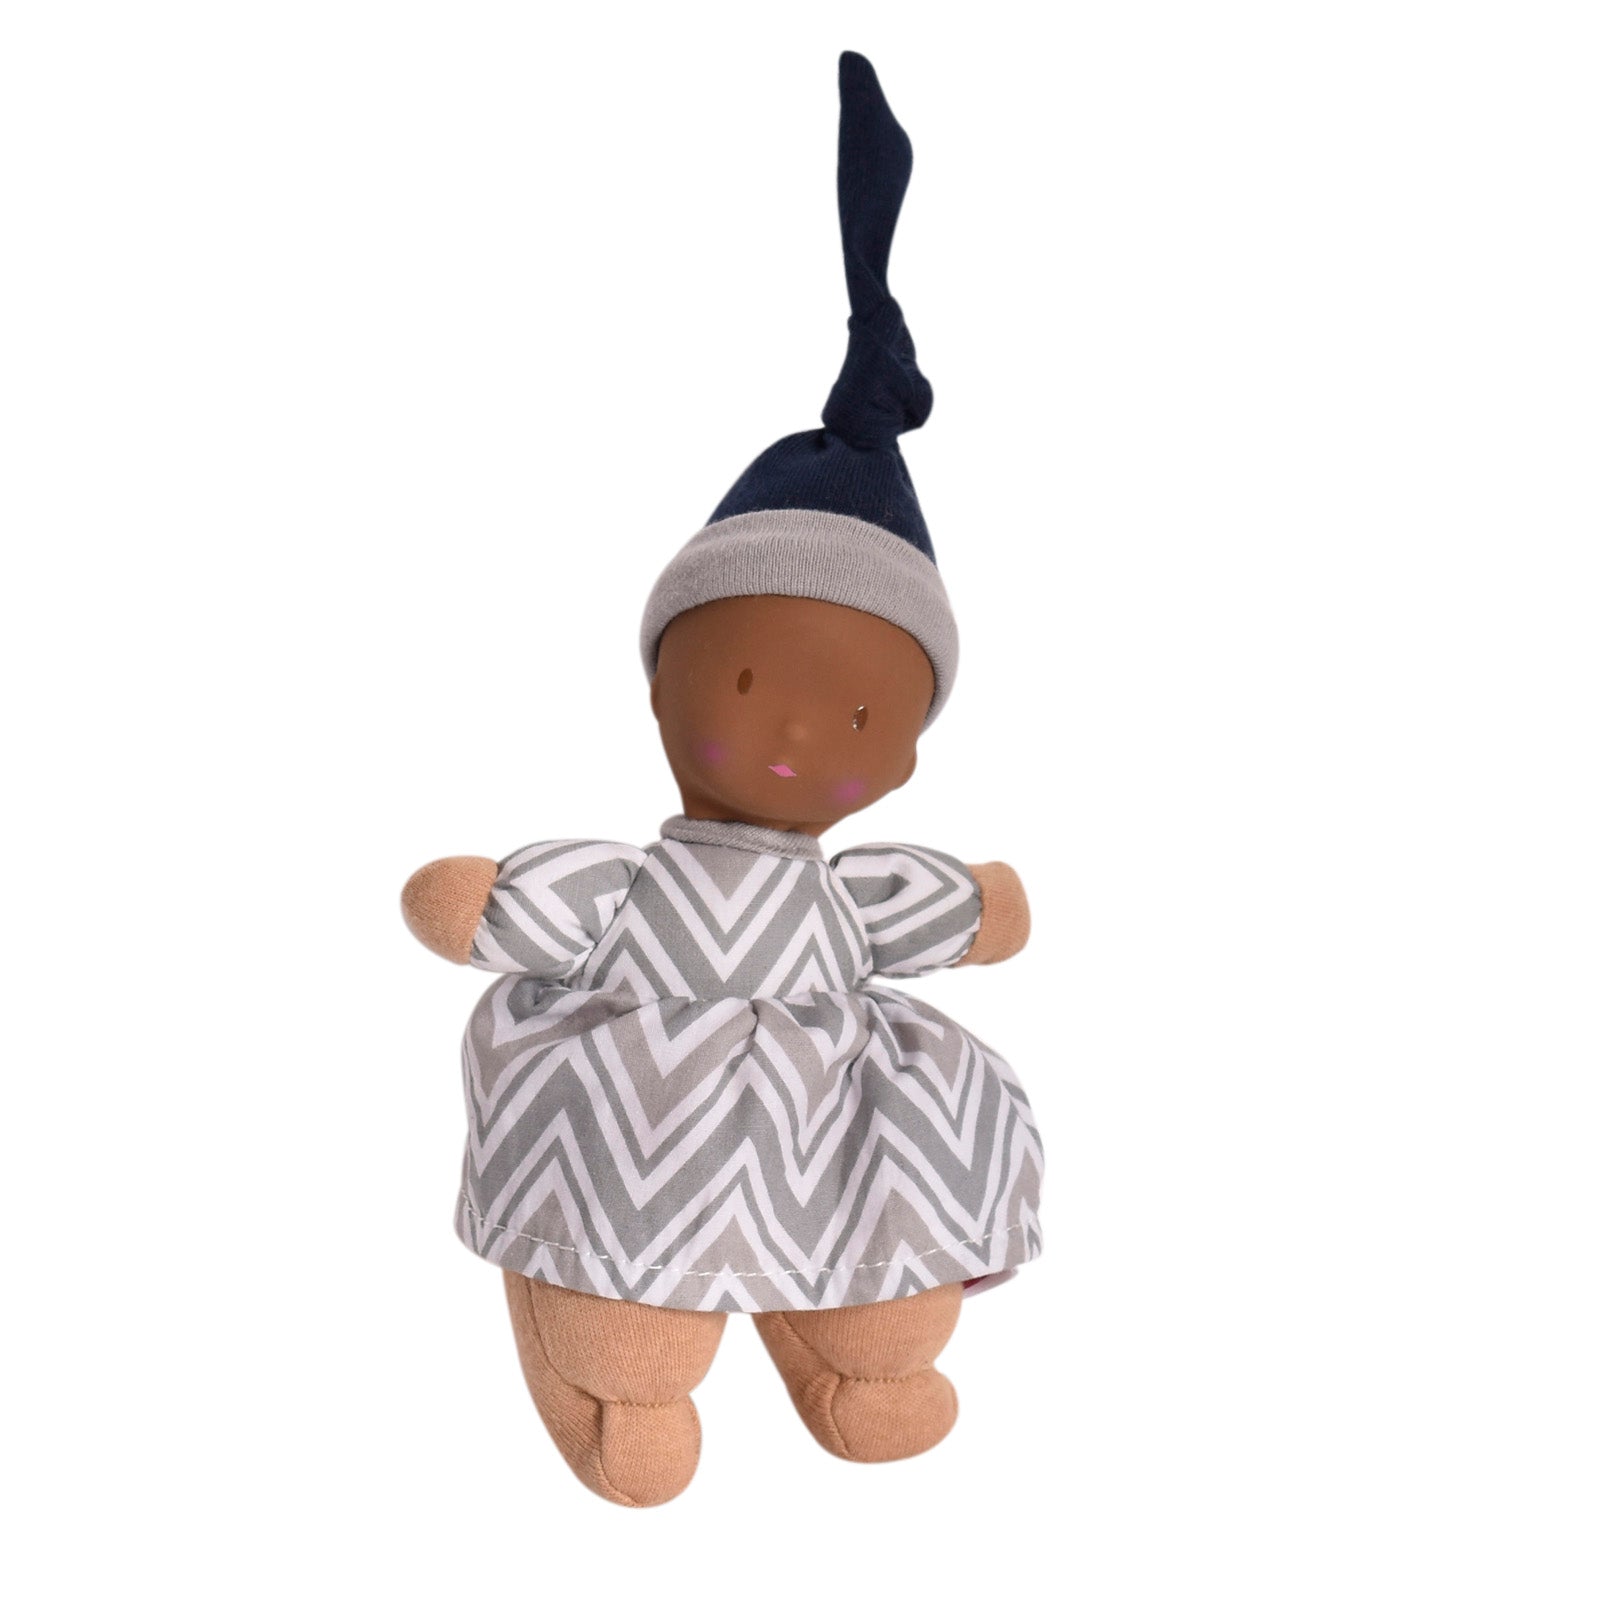 Tikiri Toys Precious Dark Skin Baby Doll with Rubber Head